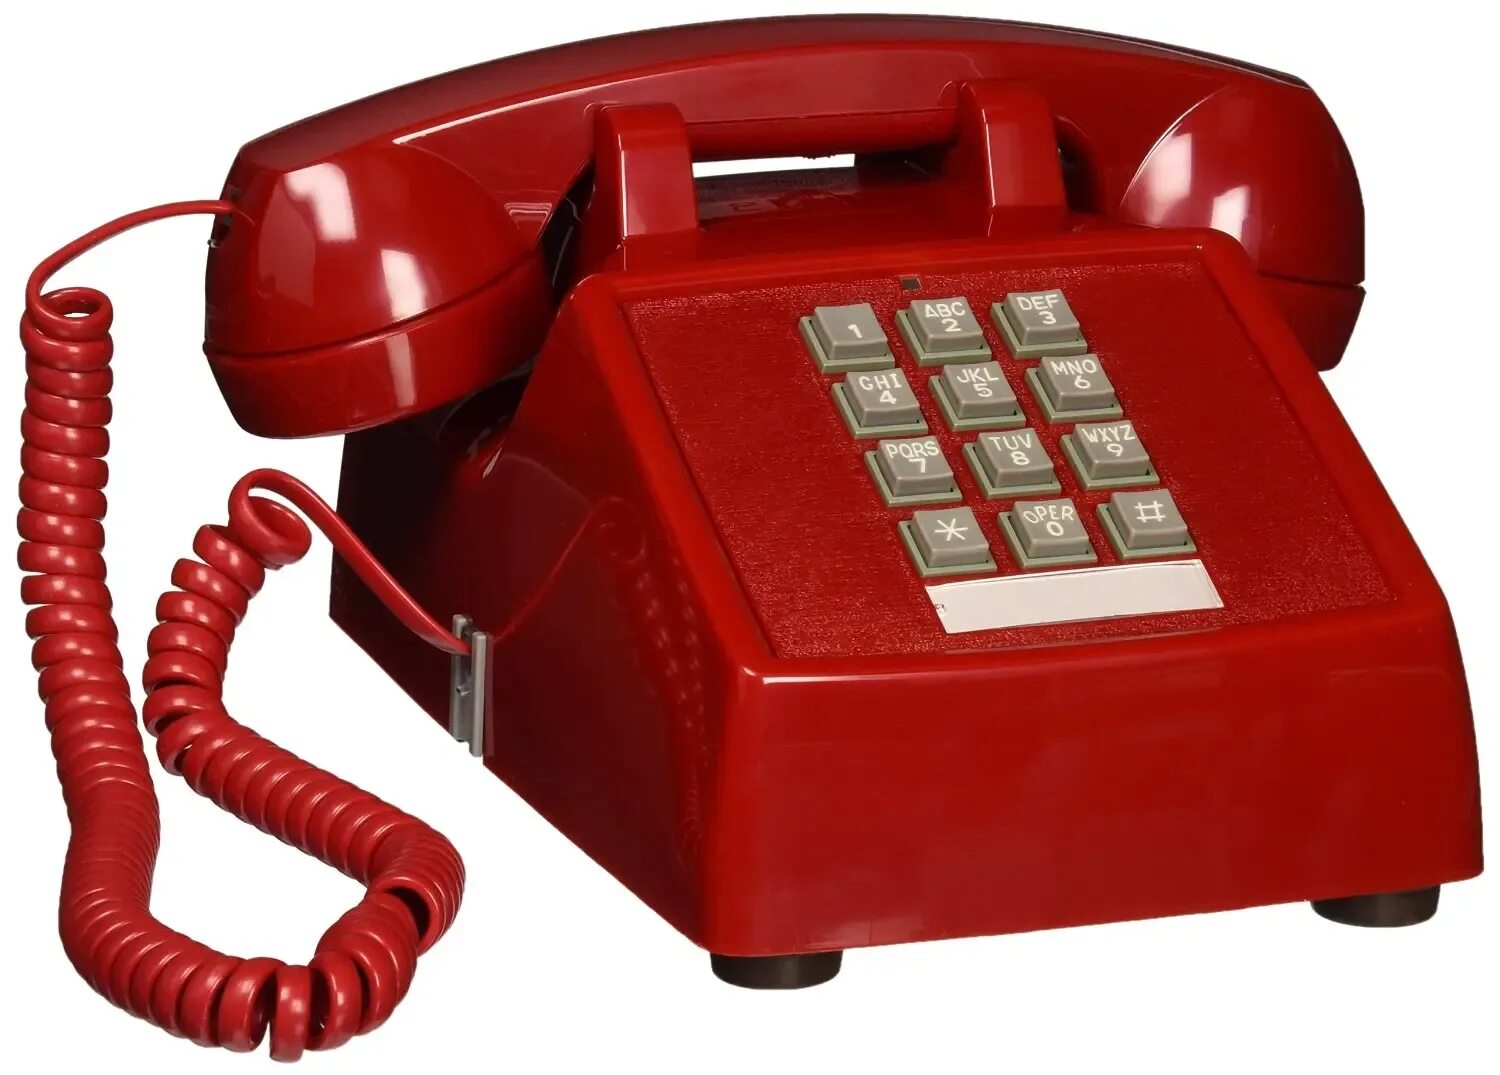 Телефон аппарат стационарный. Телефонный аппарат. Стационарный телефон. Красный телефонный аппарат. Телефонная трубка.